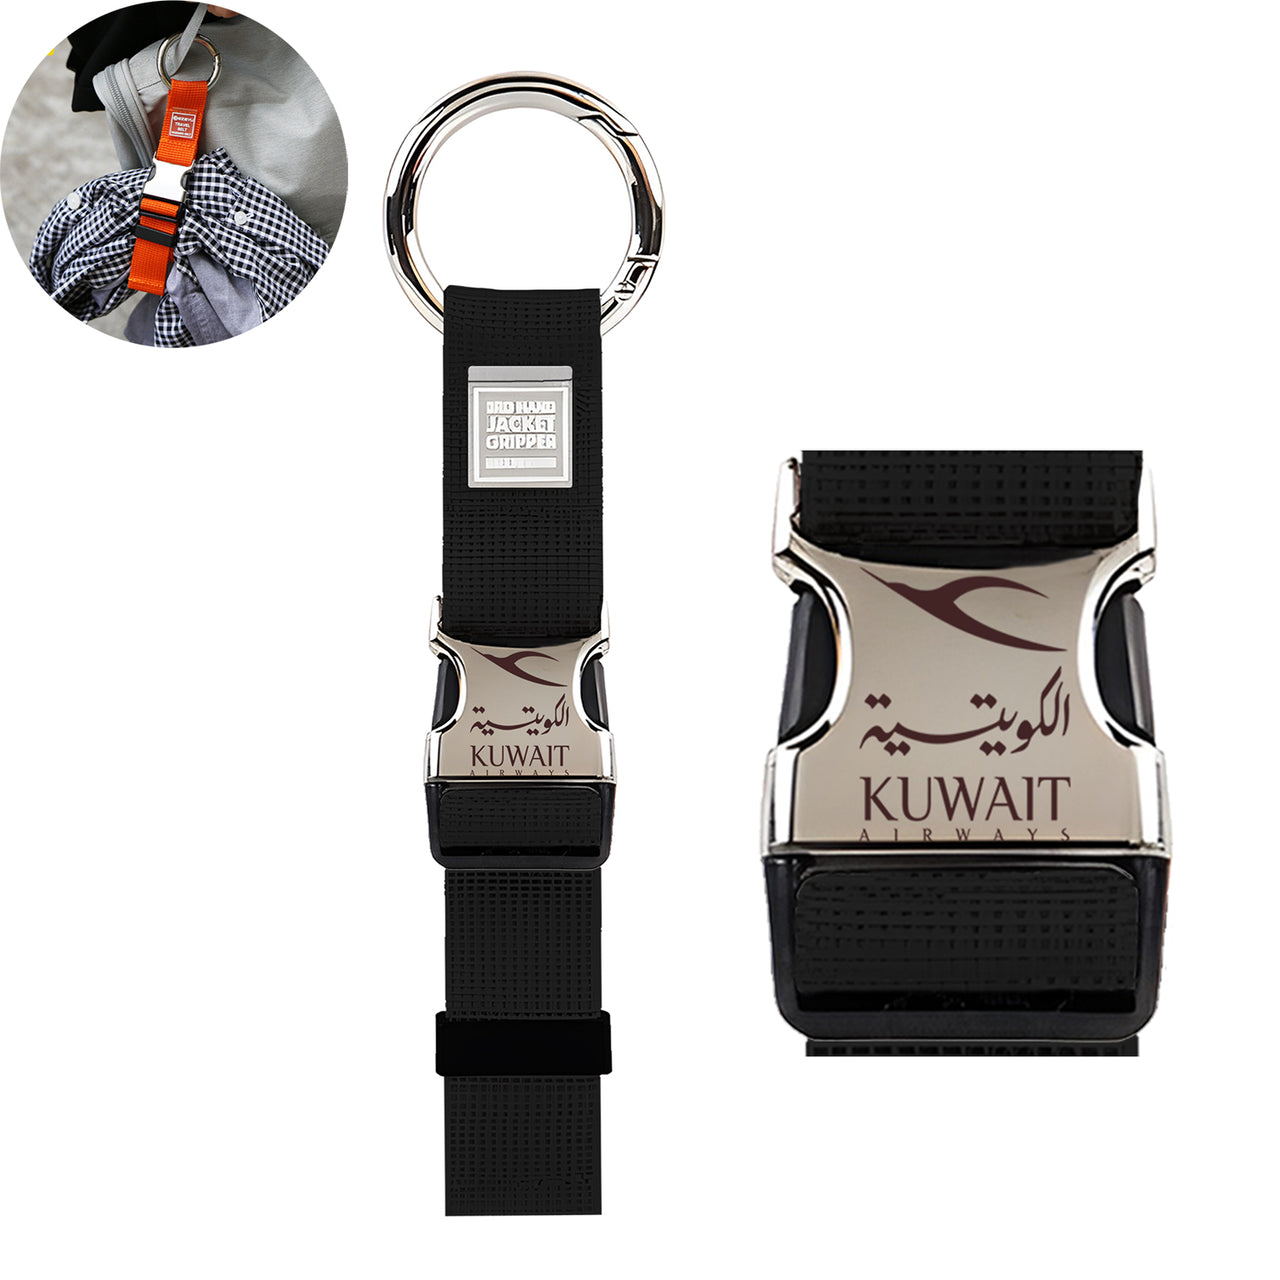 Kuwait Airways Airlines Designed Portable Luggage Strap Jacket Gripper